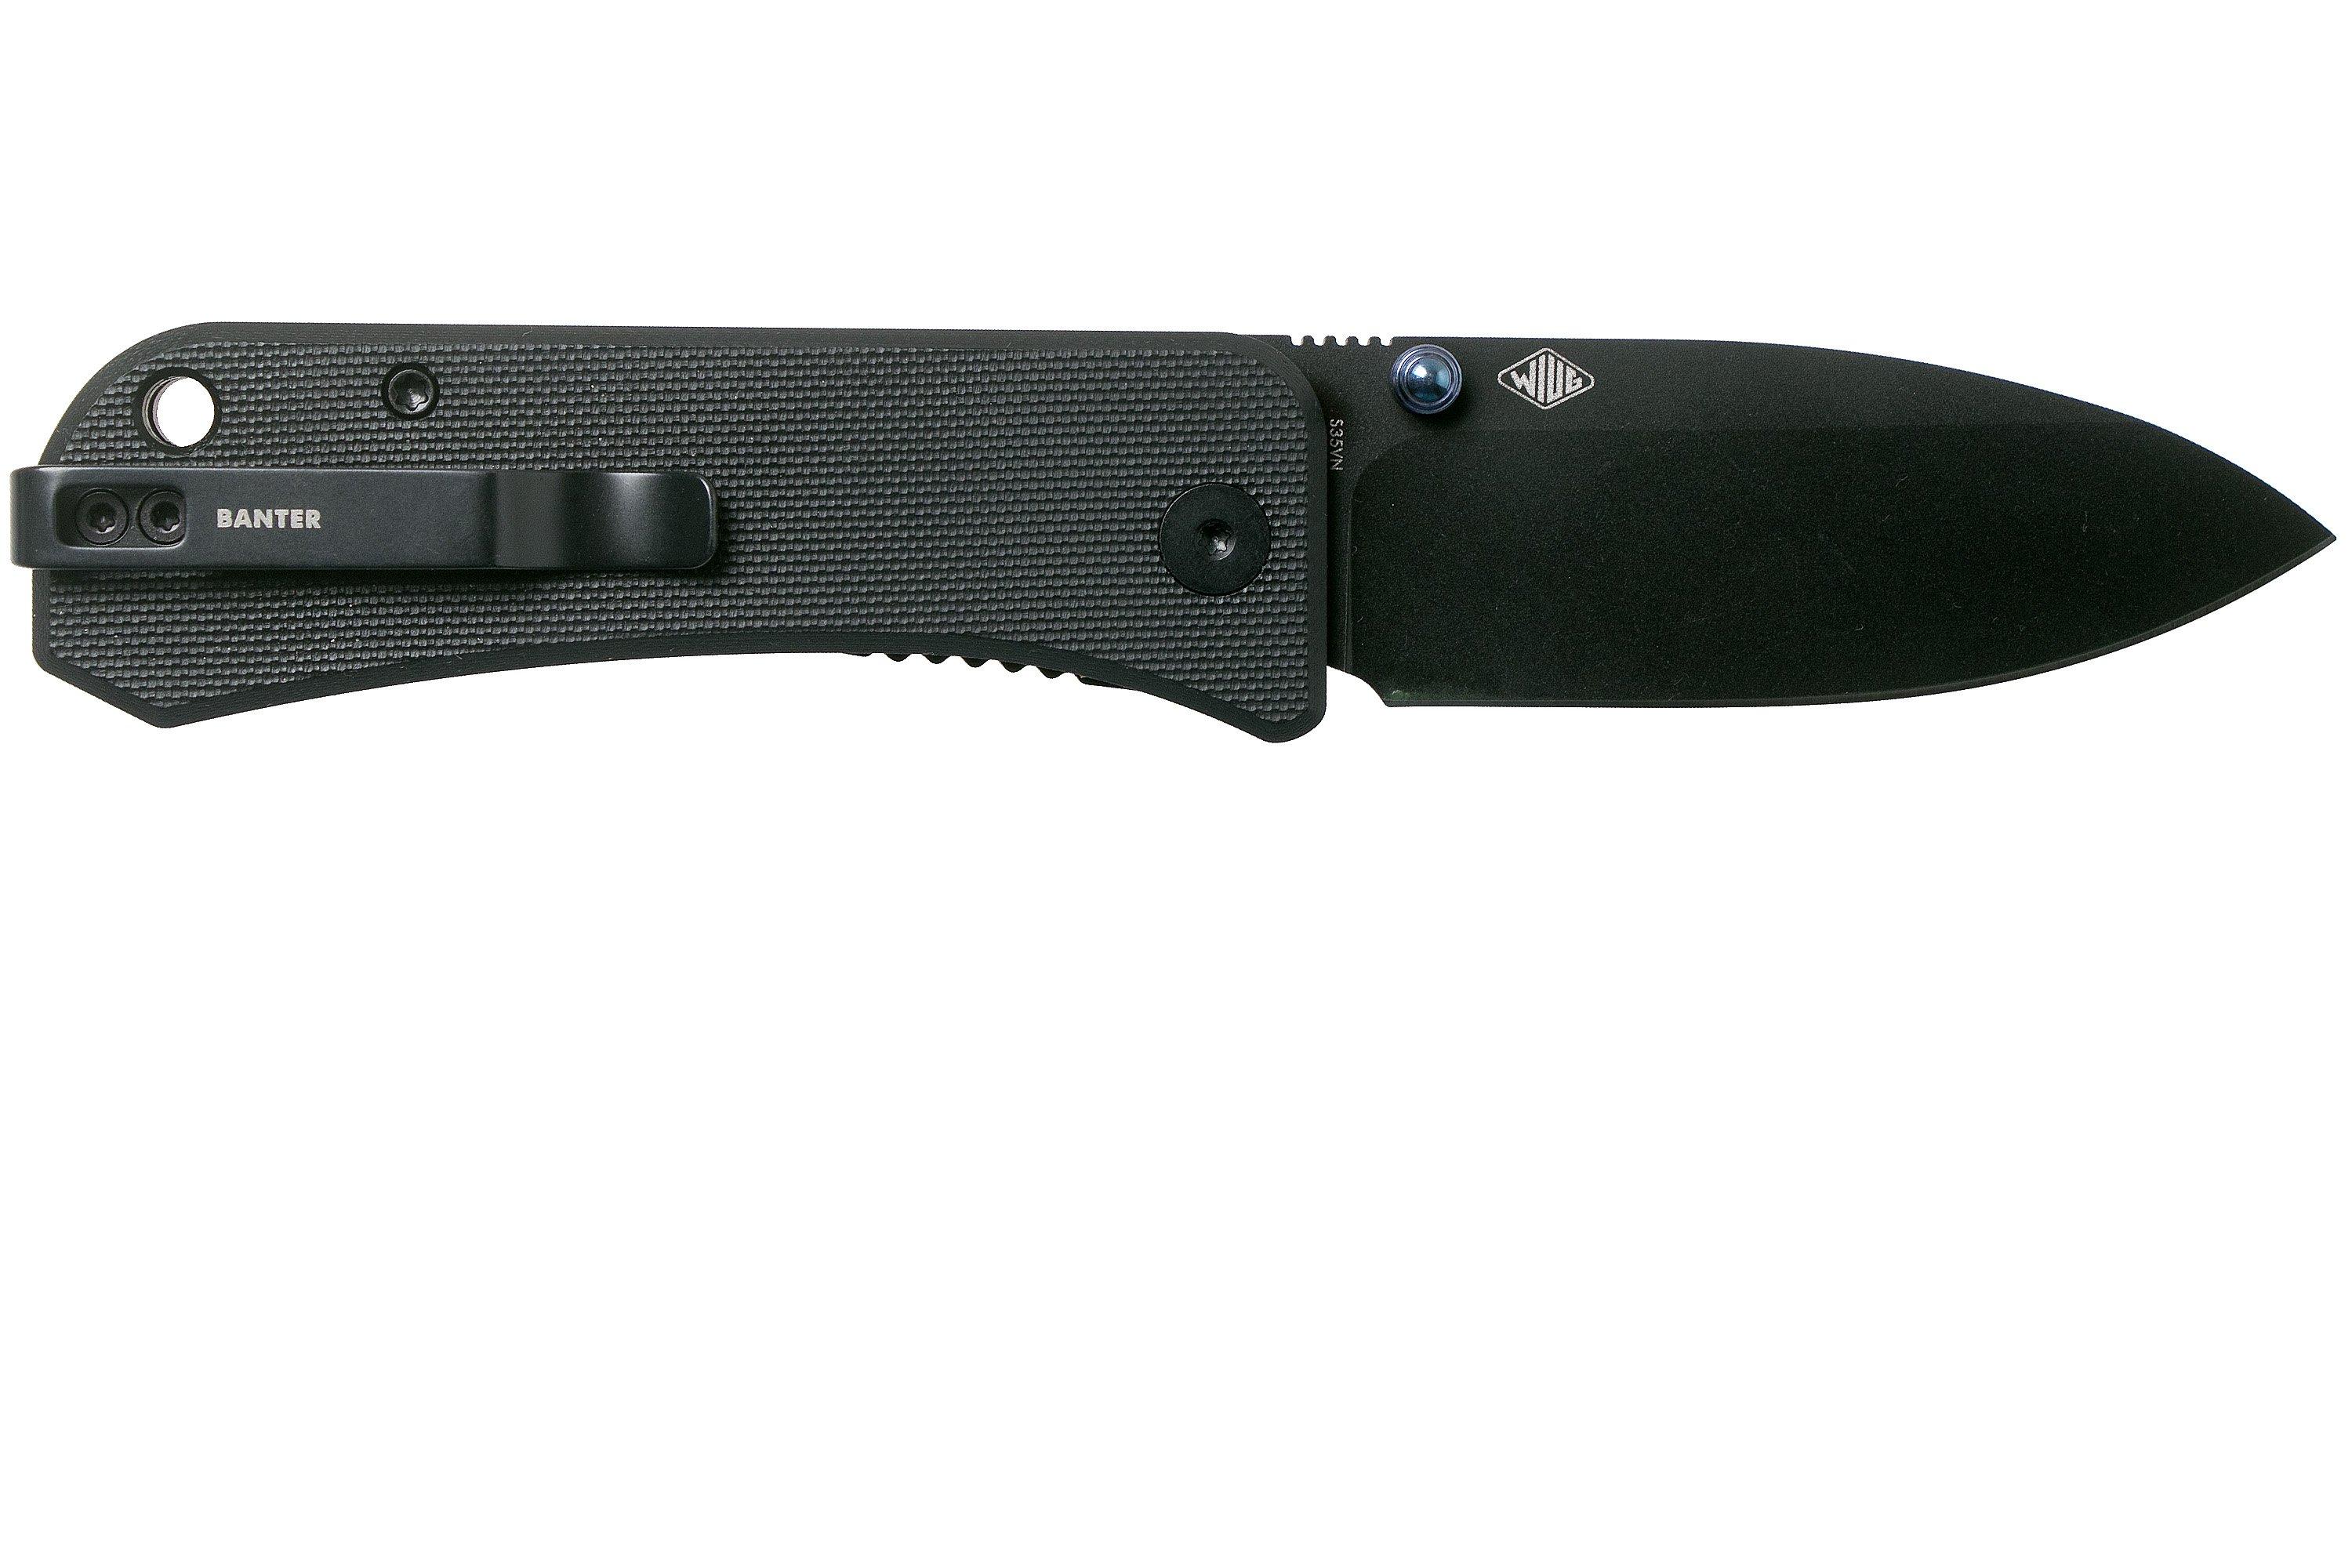  WeKnife Banter Pocket Knife for EDC, Ben Petersen Folding Knife  with 2.9”S35VN Blade, Titanium Thumb Stud Opener 2004B (Black) : Tools &  Home Improvement